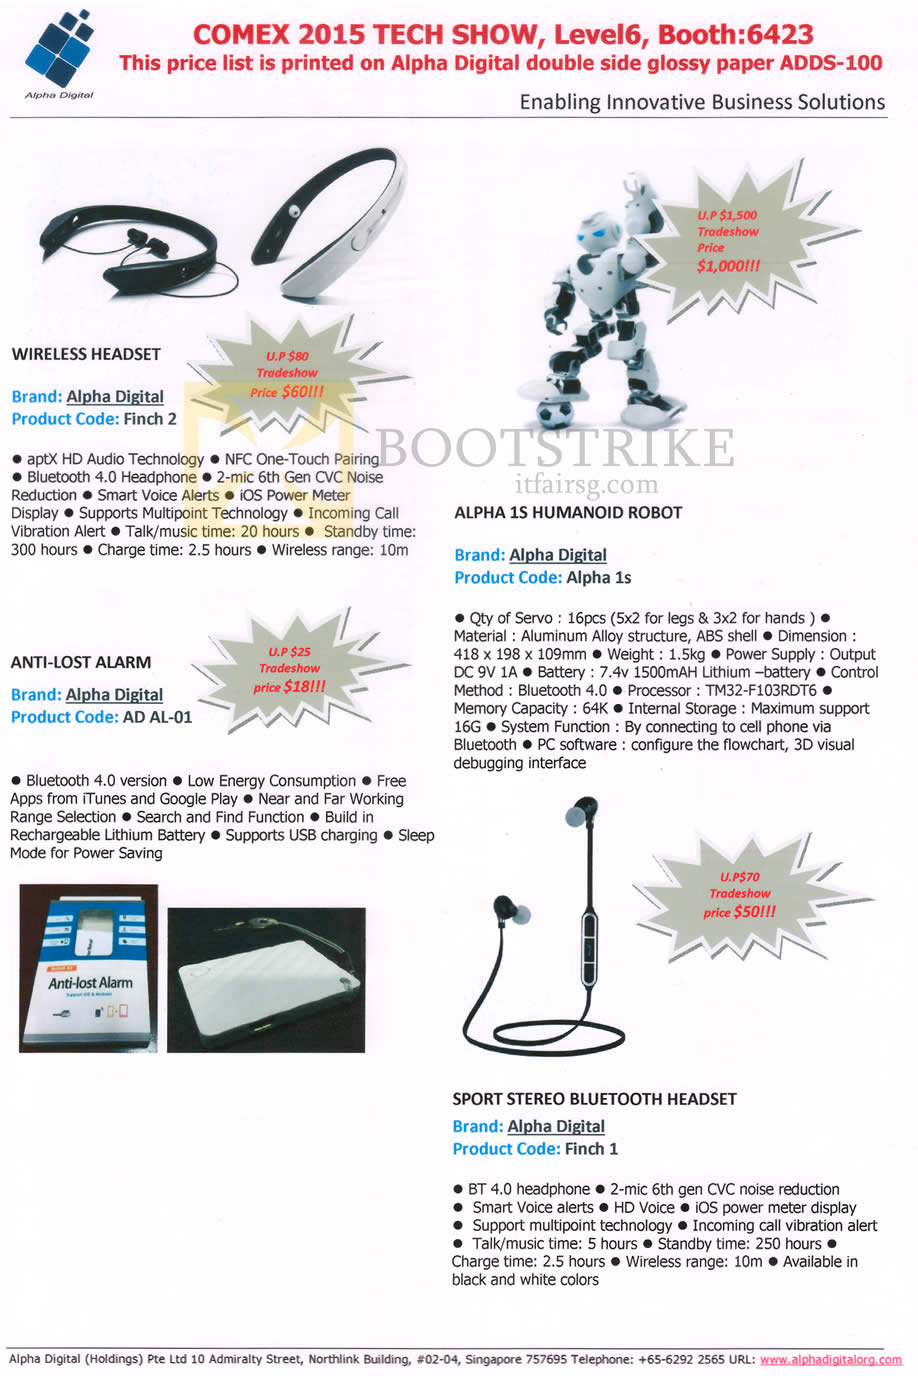 COMEX 2015 price list image brochure of Alpha Digital Wireless Headset Finch 2, Alpha 15 Humanoid Robot Alpha 1s, Anti-lost Alarm AD AL-01, Sport Stereo Bluetooth Headset Finch 1